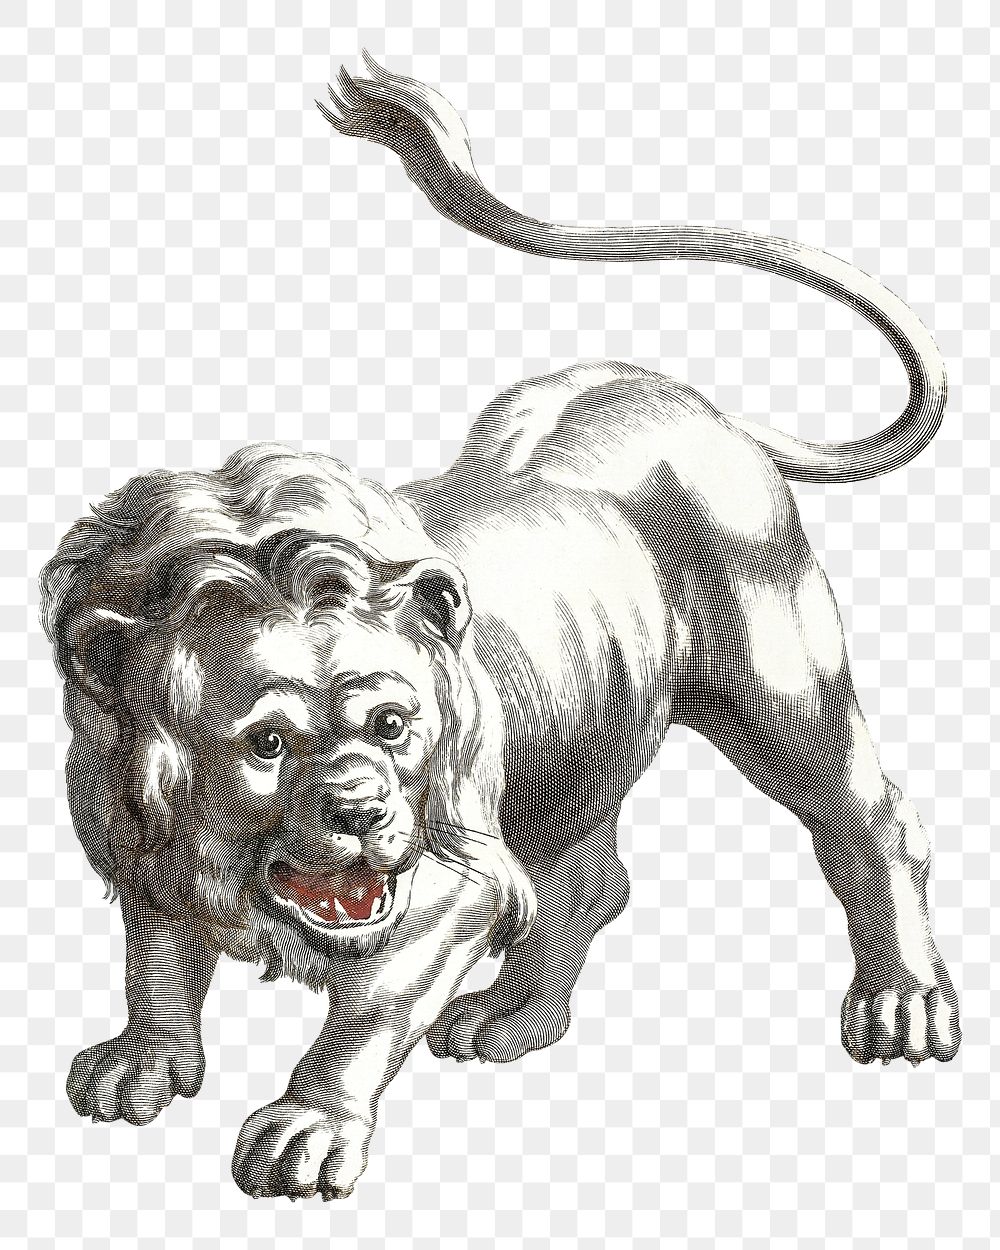 Lion png sticker bw wild animal illustration